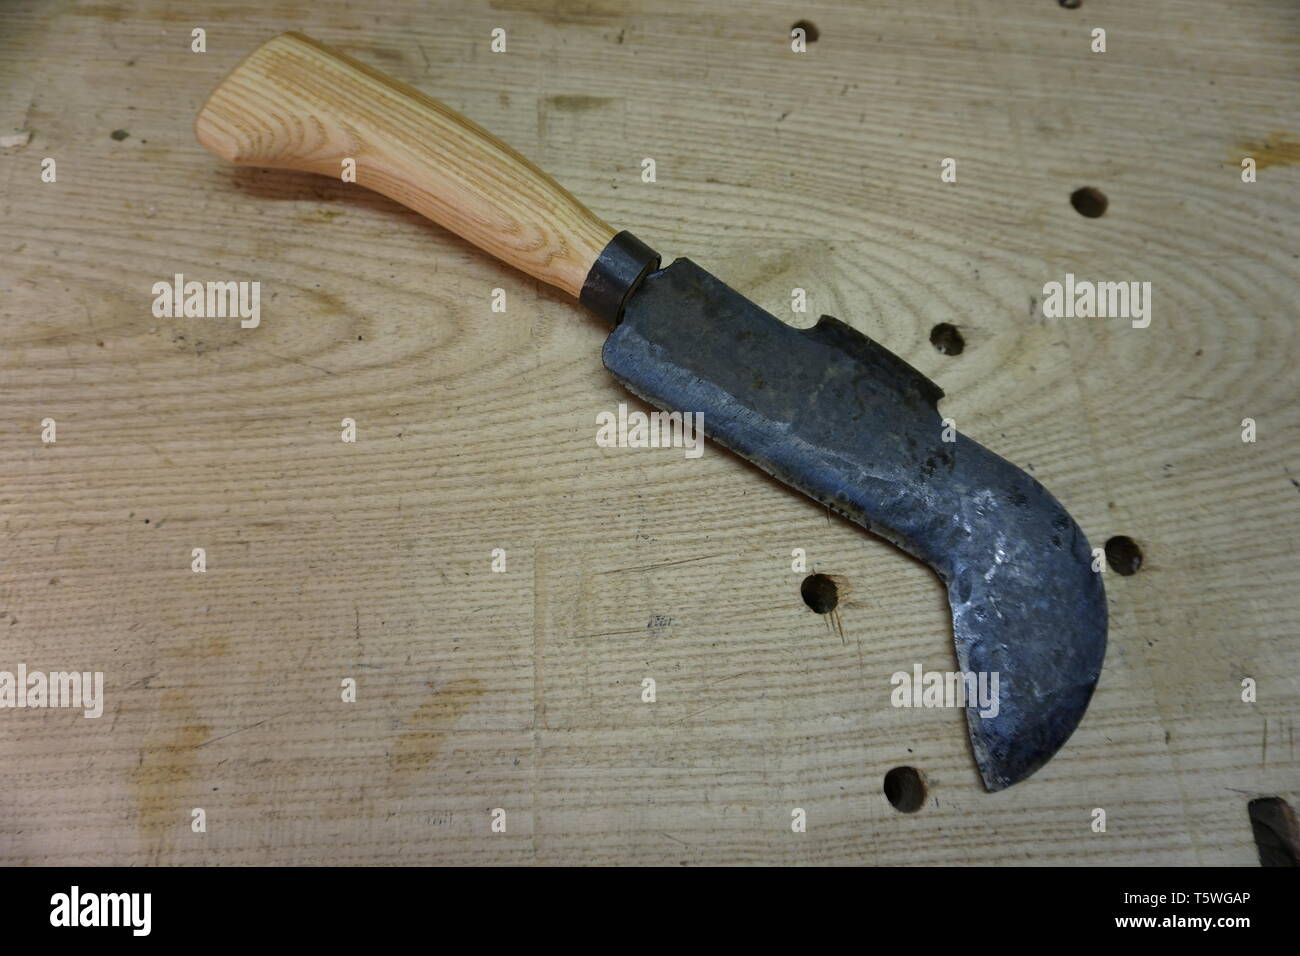 daegrad tools billhook brightside pattern no2 made in sheffield Stock Photo